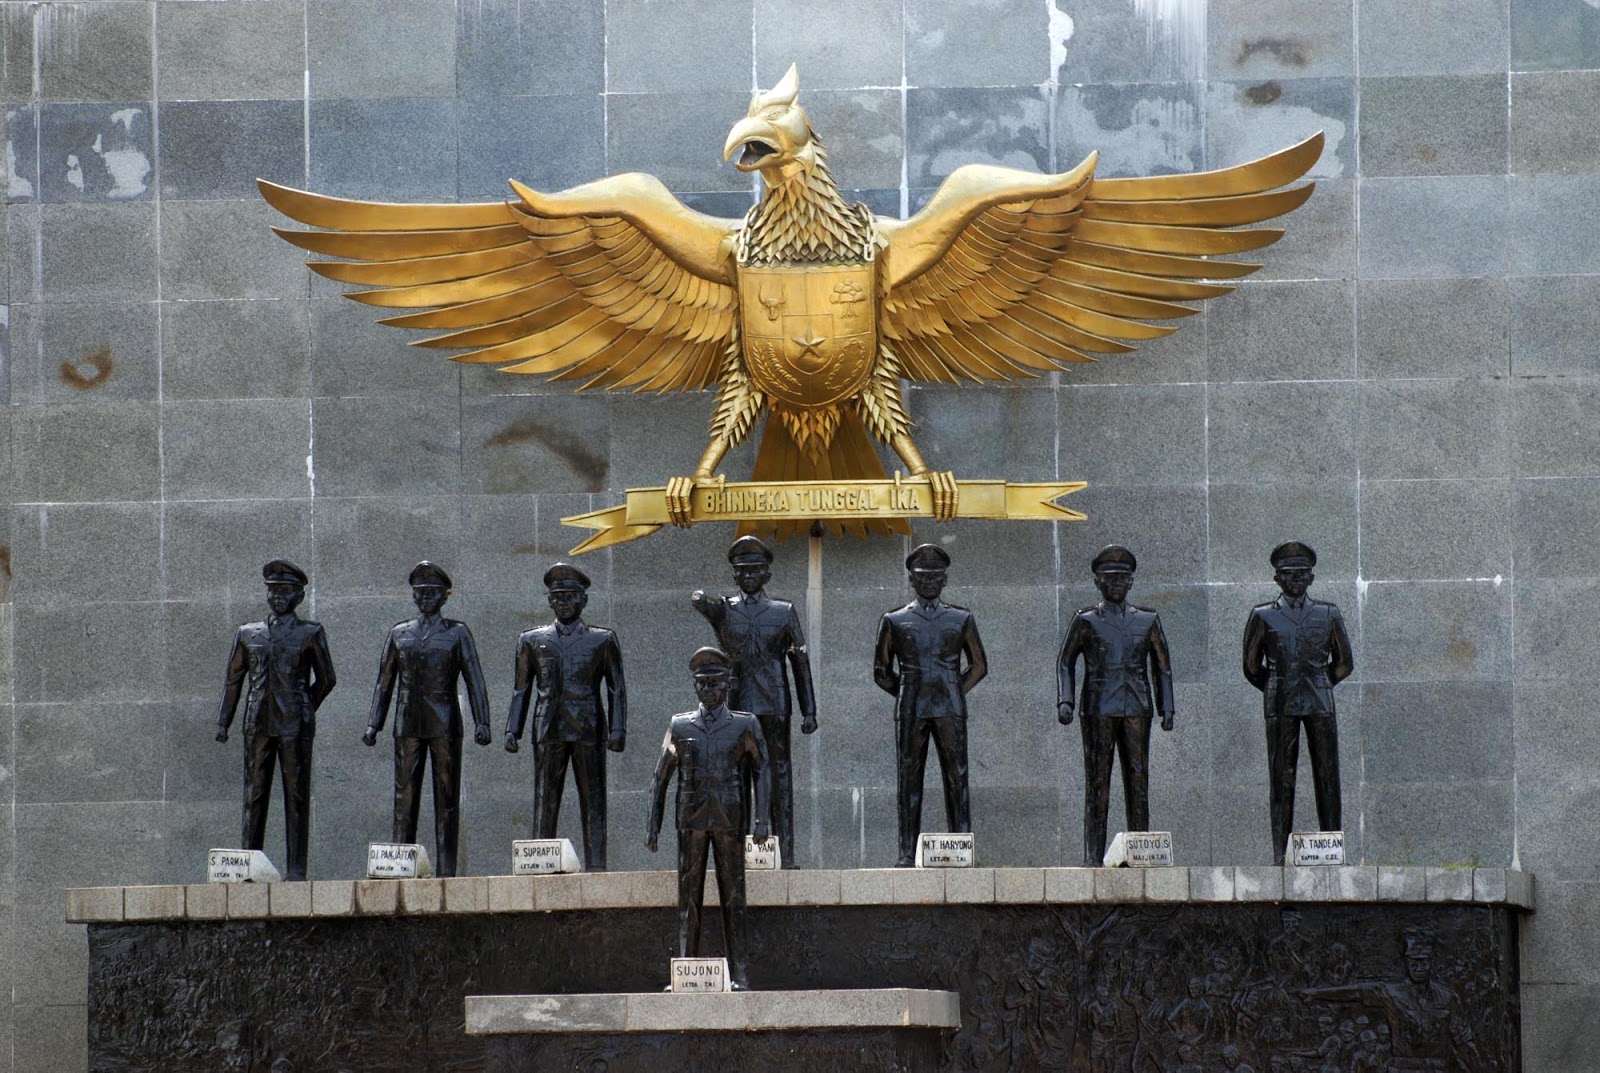 Inilah Kembaran Monumen Pahlawan Revolusi - Batikimono